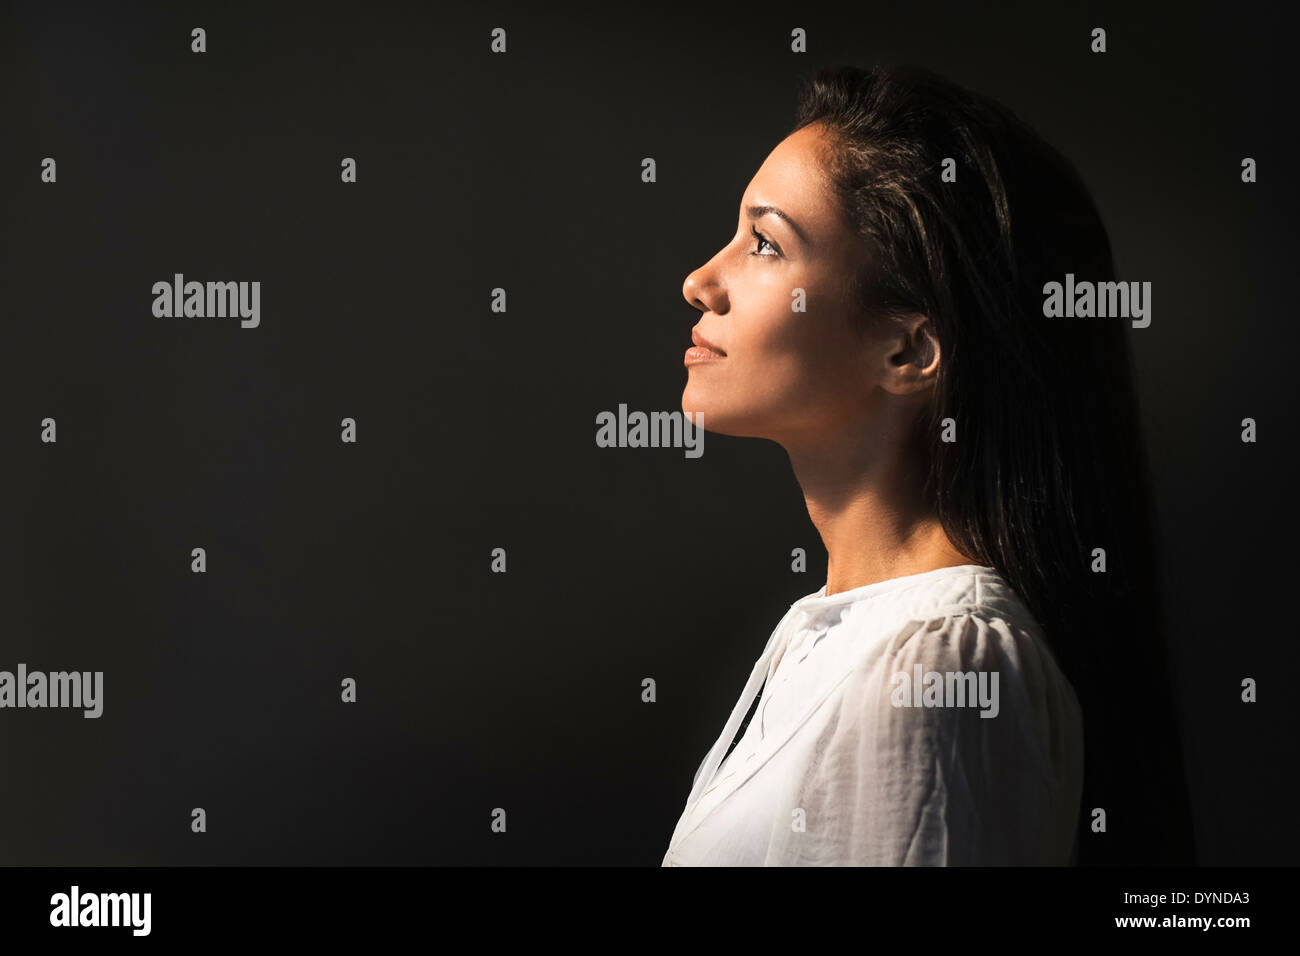 Hispanic woman looking up into light Stock Photo